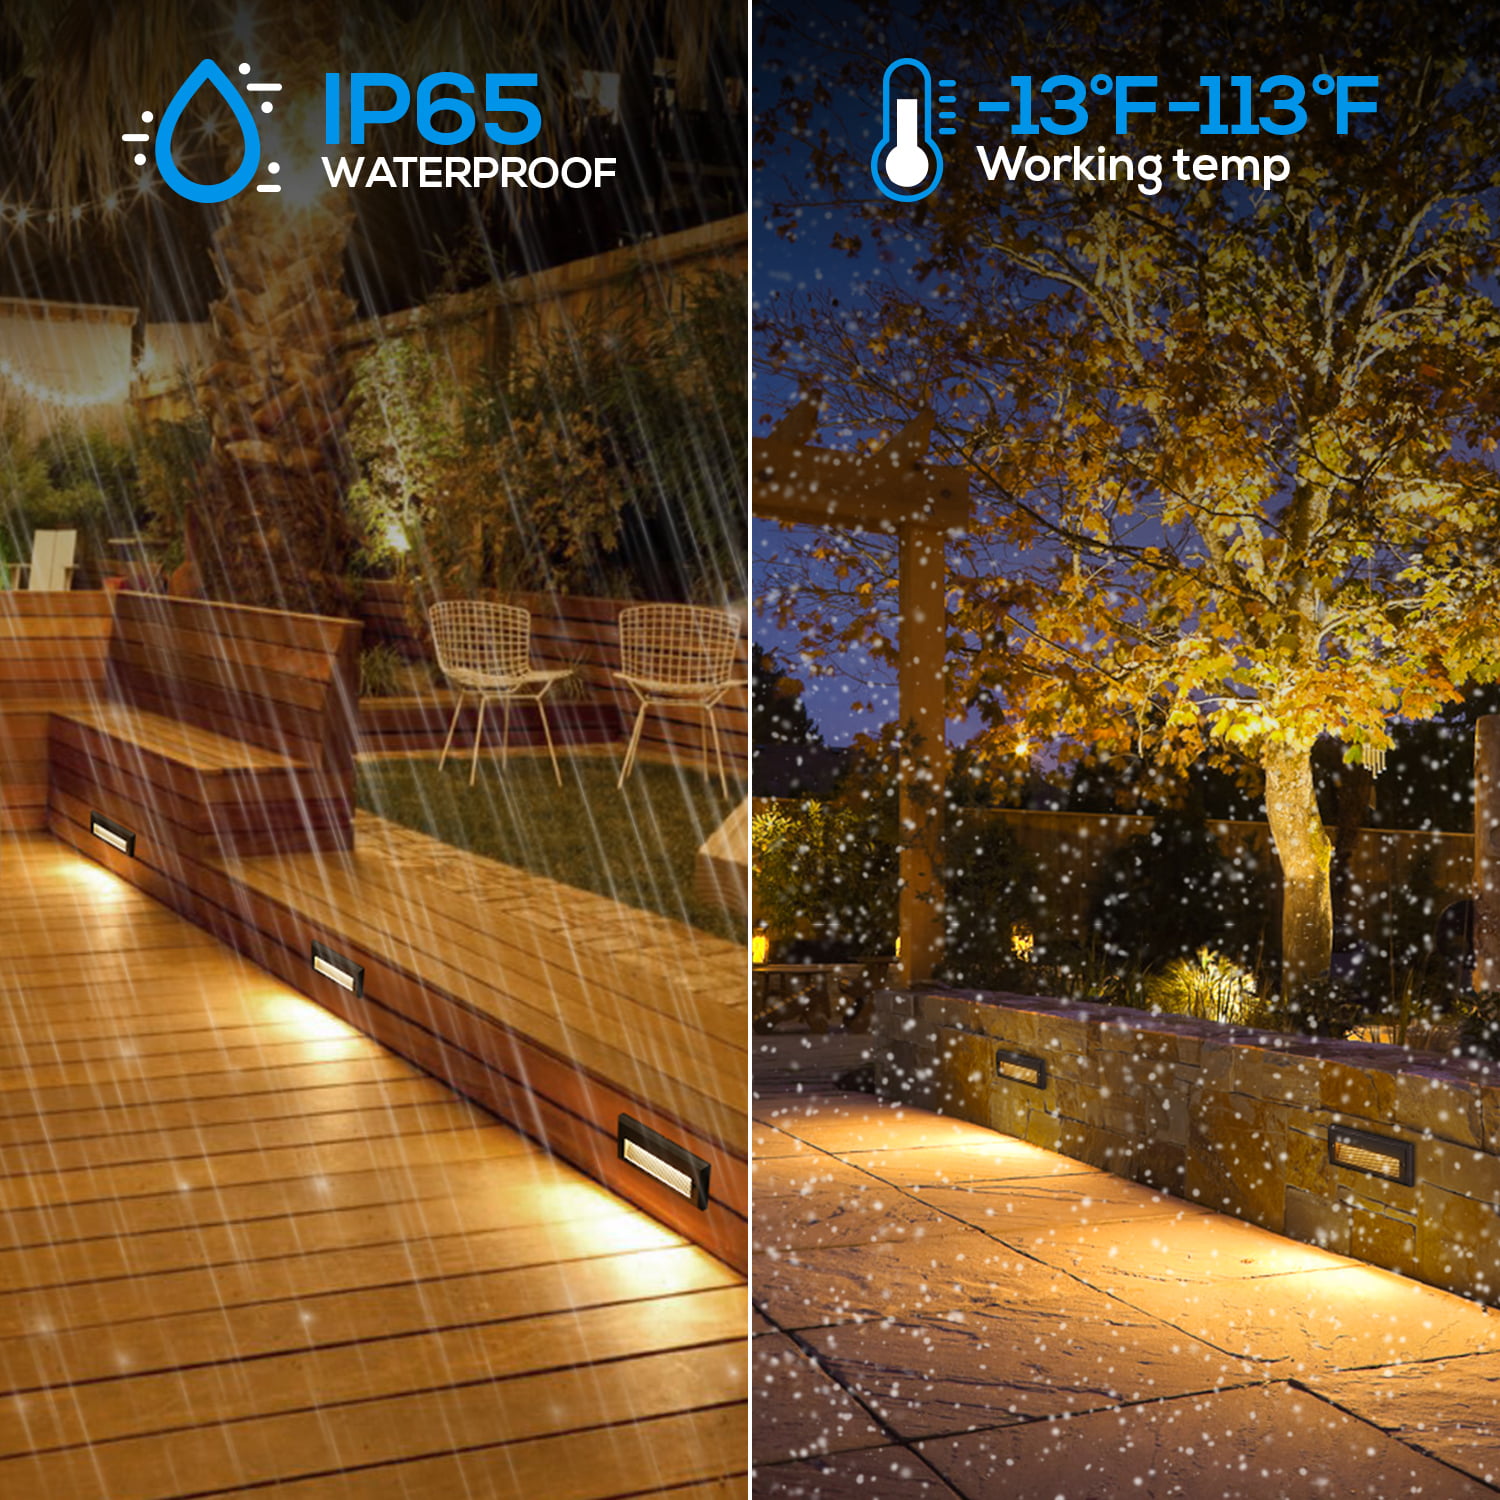 12-Pack of DLA01 Low Voltage Deck Lights  Outdoor Step Lights – Sun Bright  Lighting